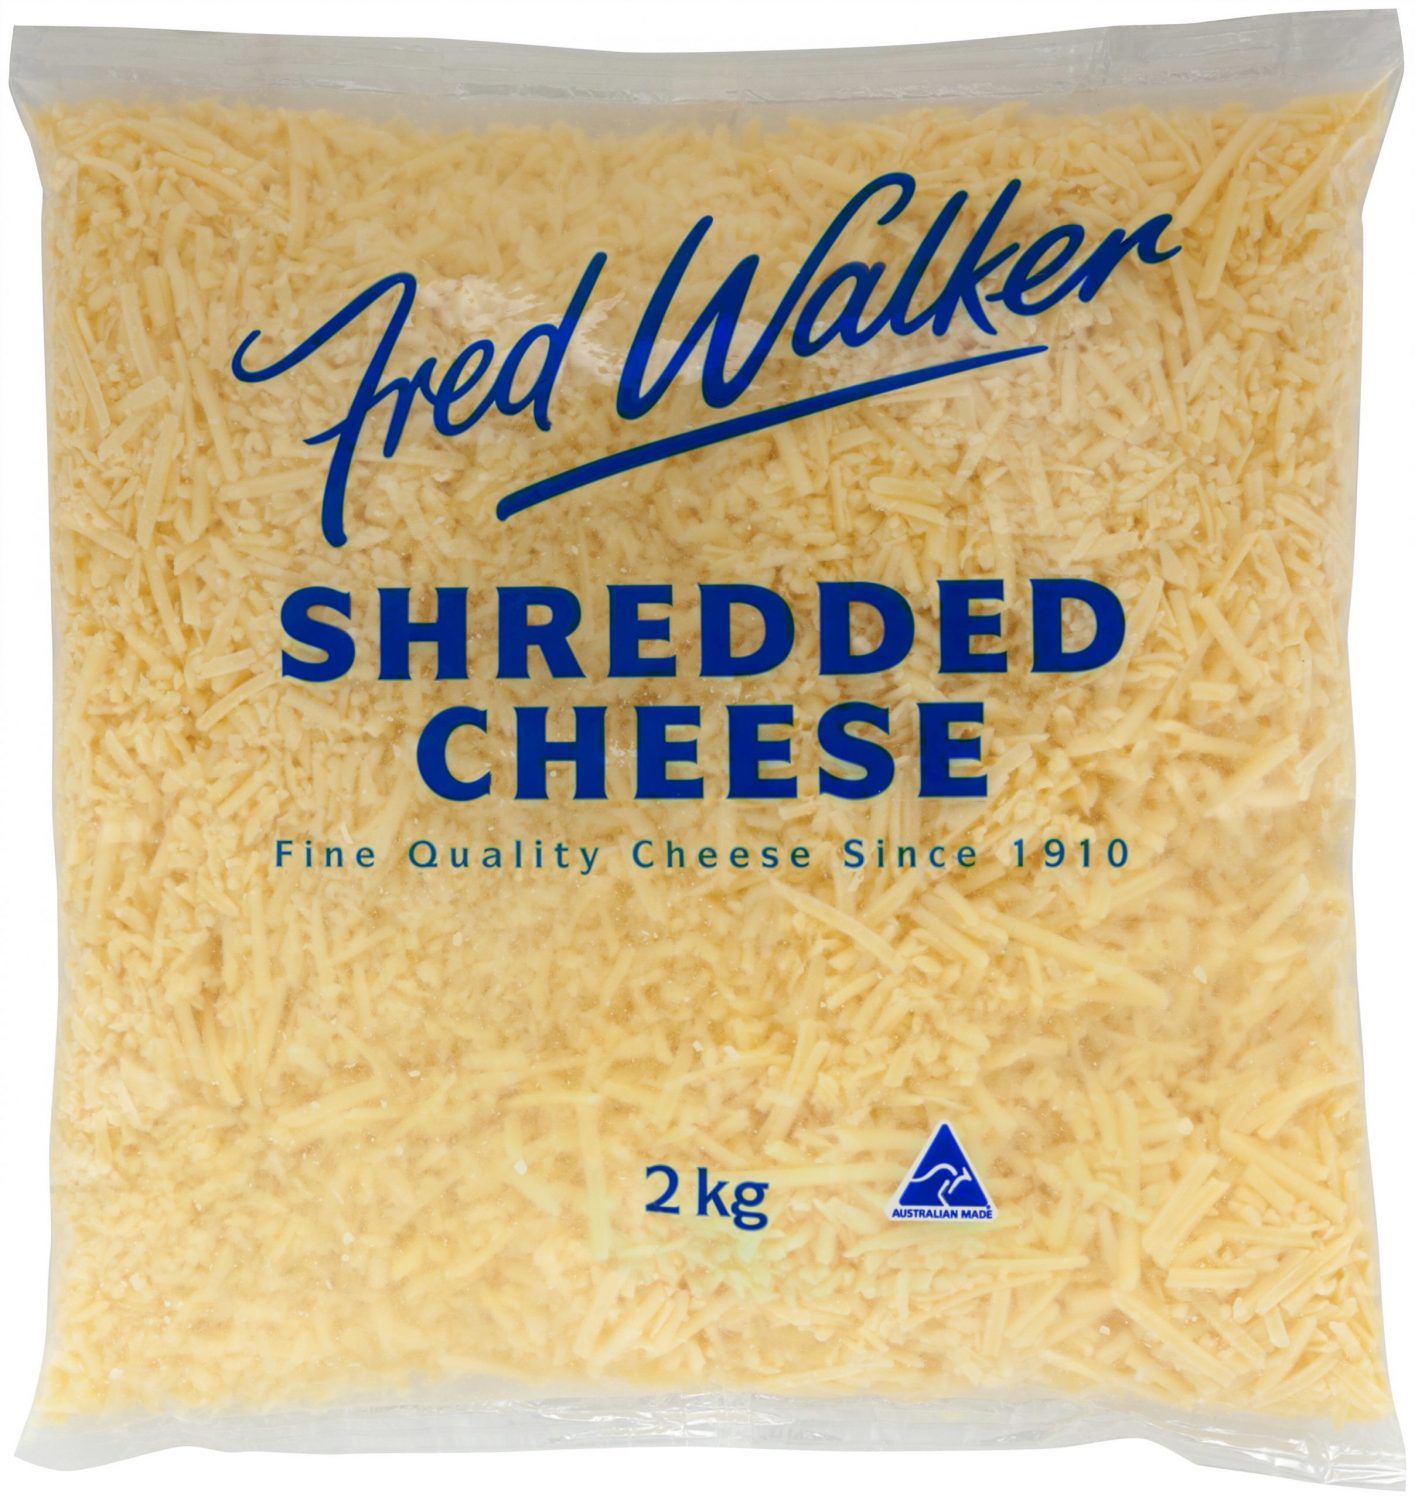 Cheese – Fred Walker Shredded Tasty 2kg